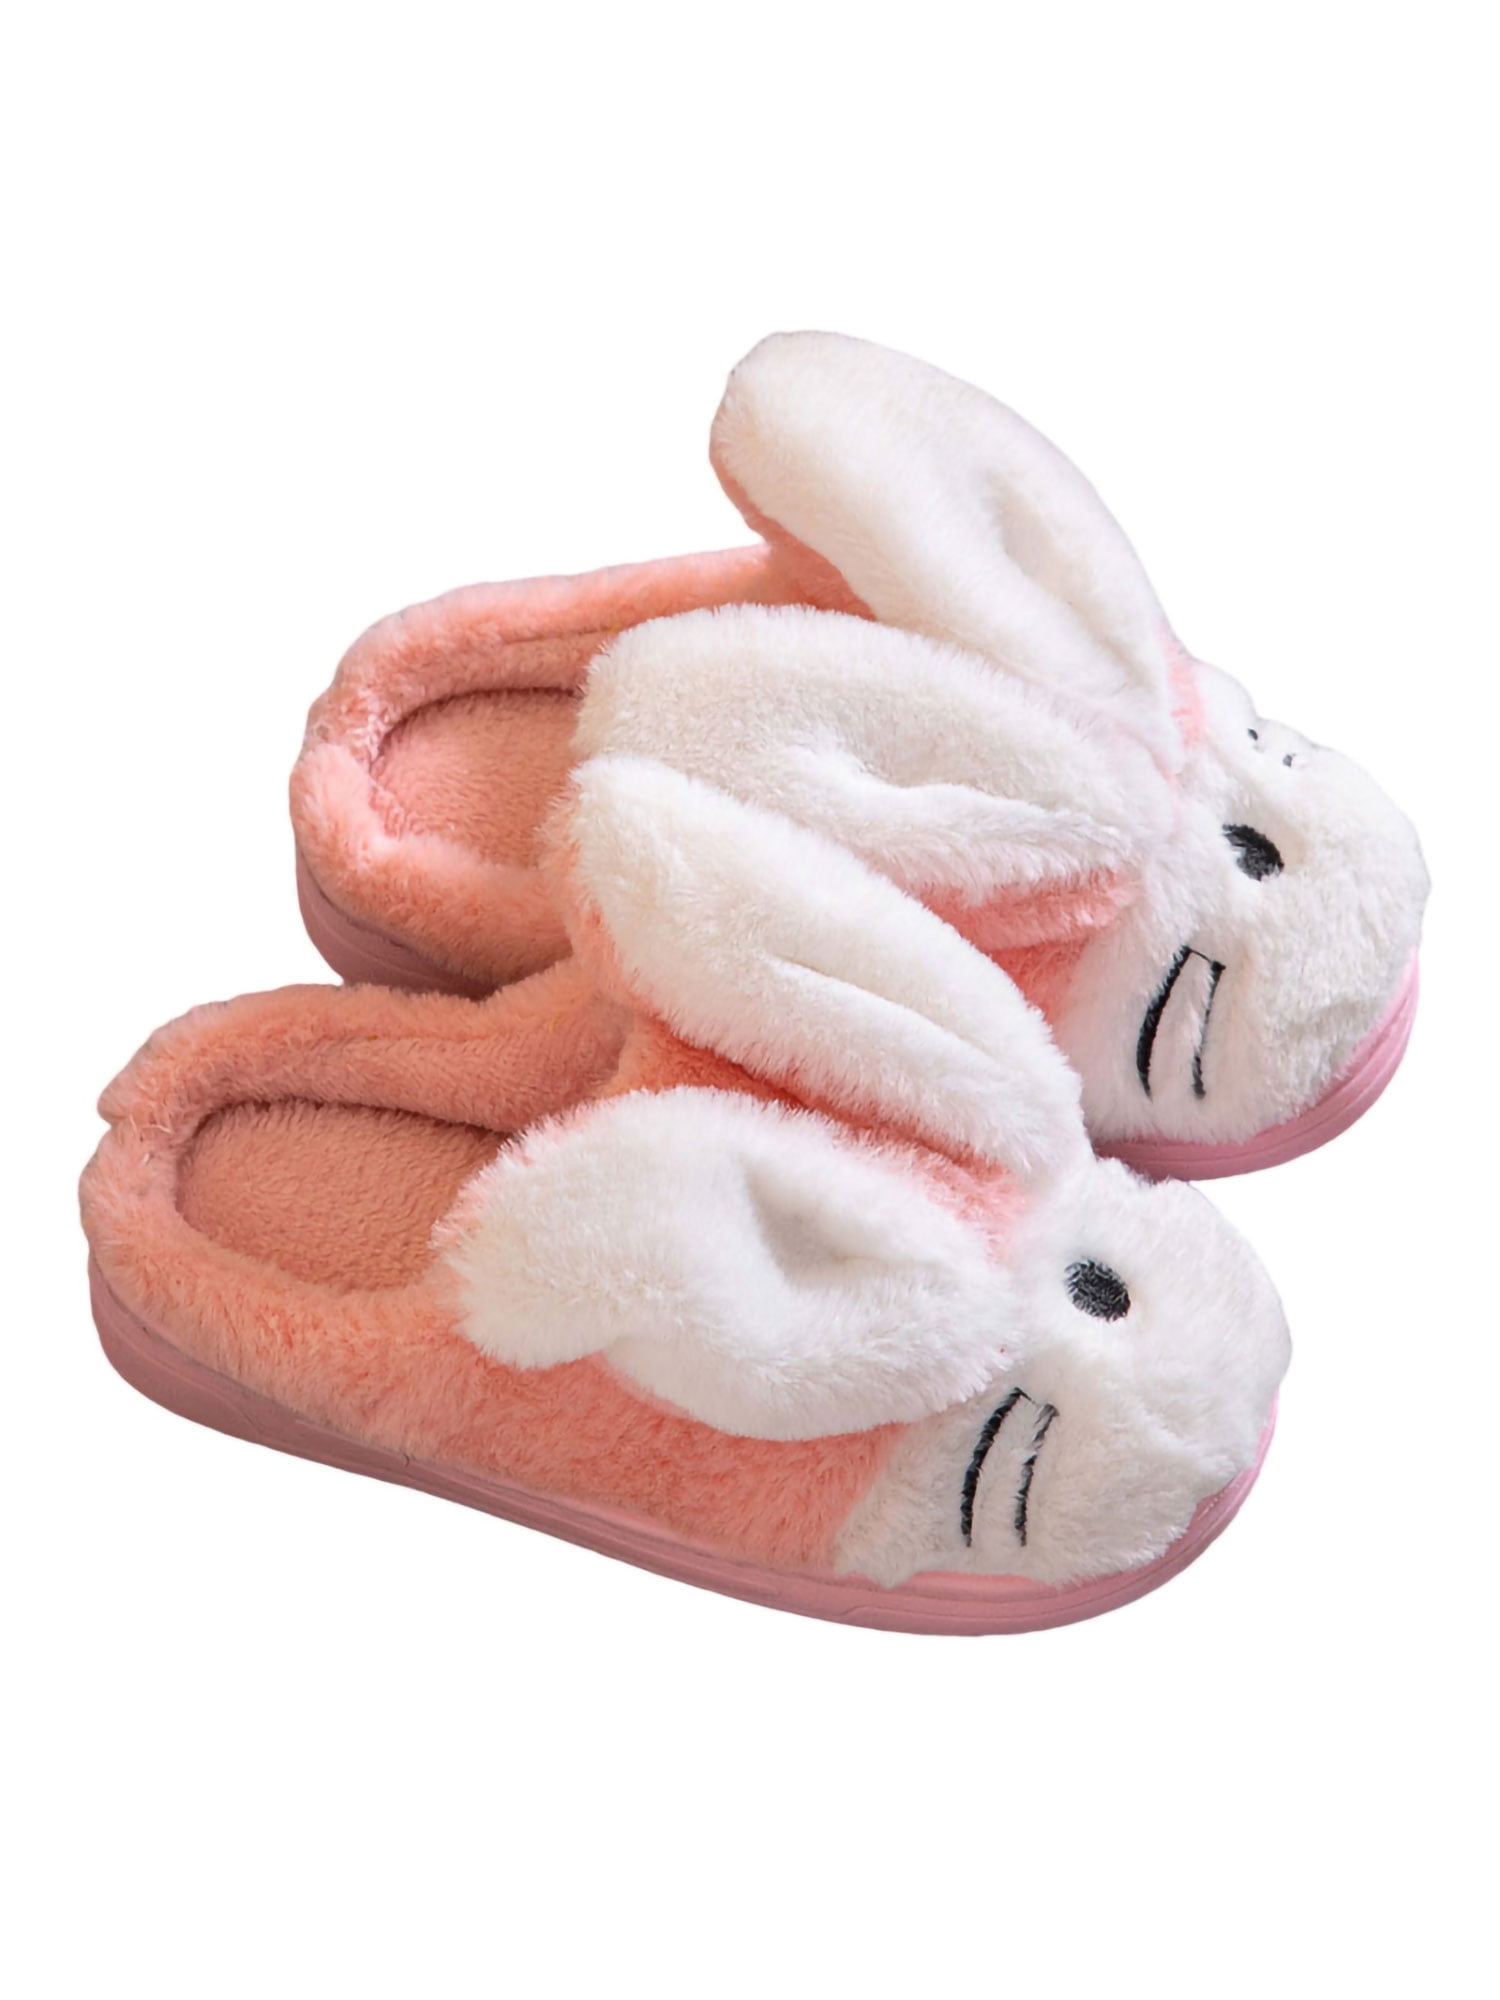 Girls Kids 3D Novelty Plush Fleece Warm Slippers Bootee Xmas Gift Size 9-3